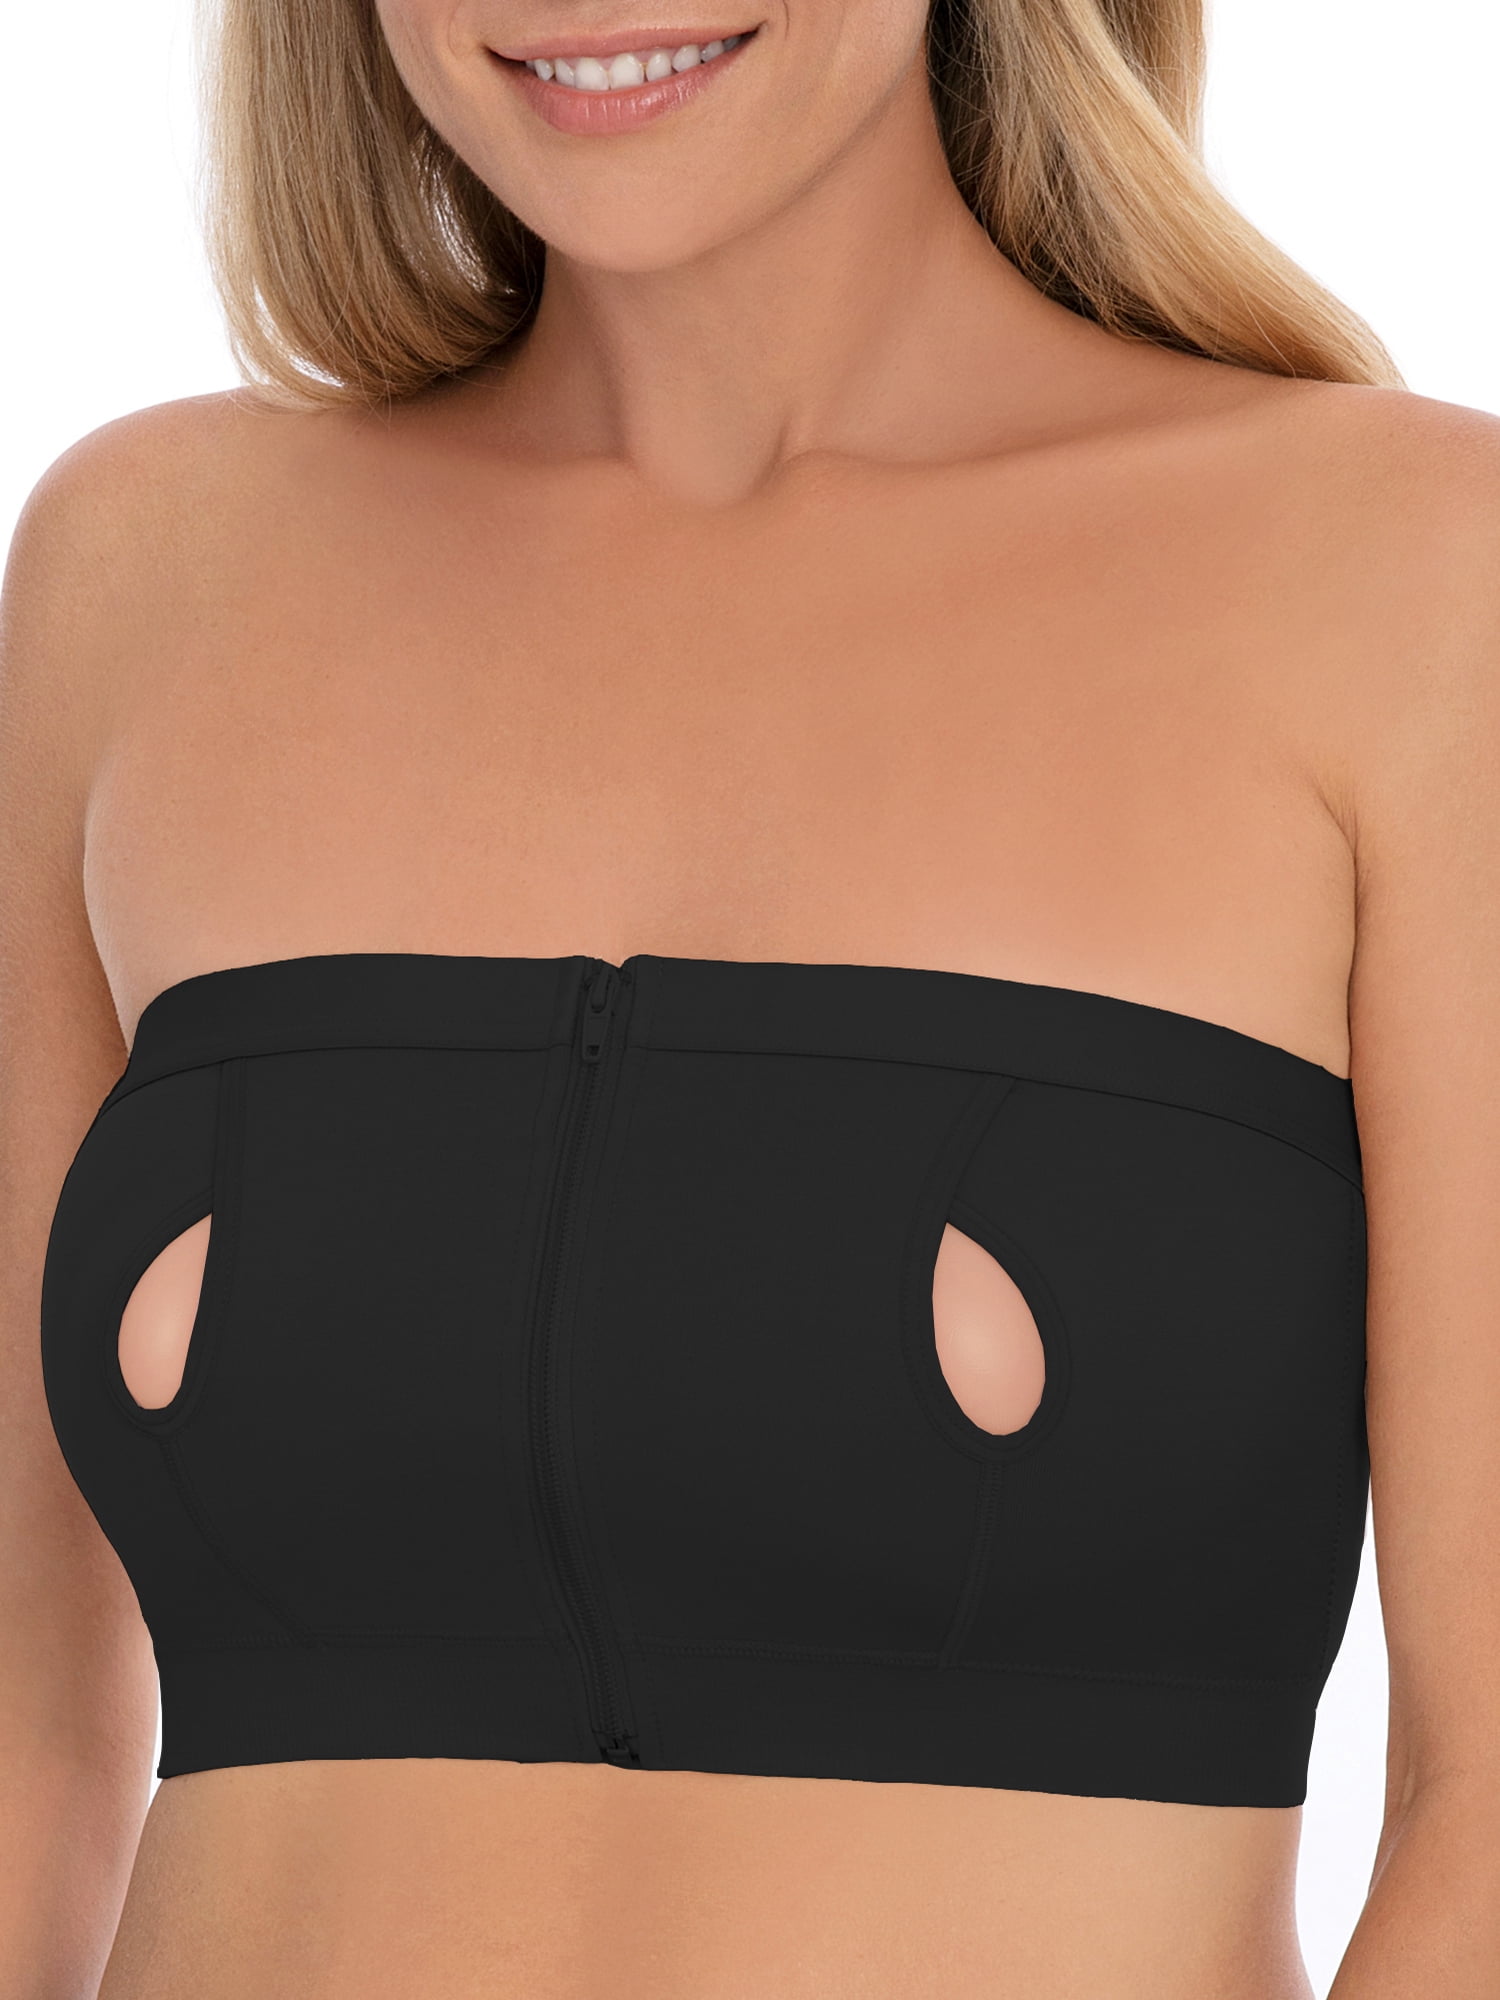 Ladieshow 3Colors 3Sizes Slim Breastfeeding Tank Top with Built-in Nursing Bra Maternity Vest Undershirt XXL-Black 